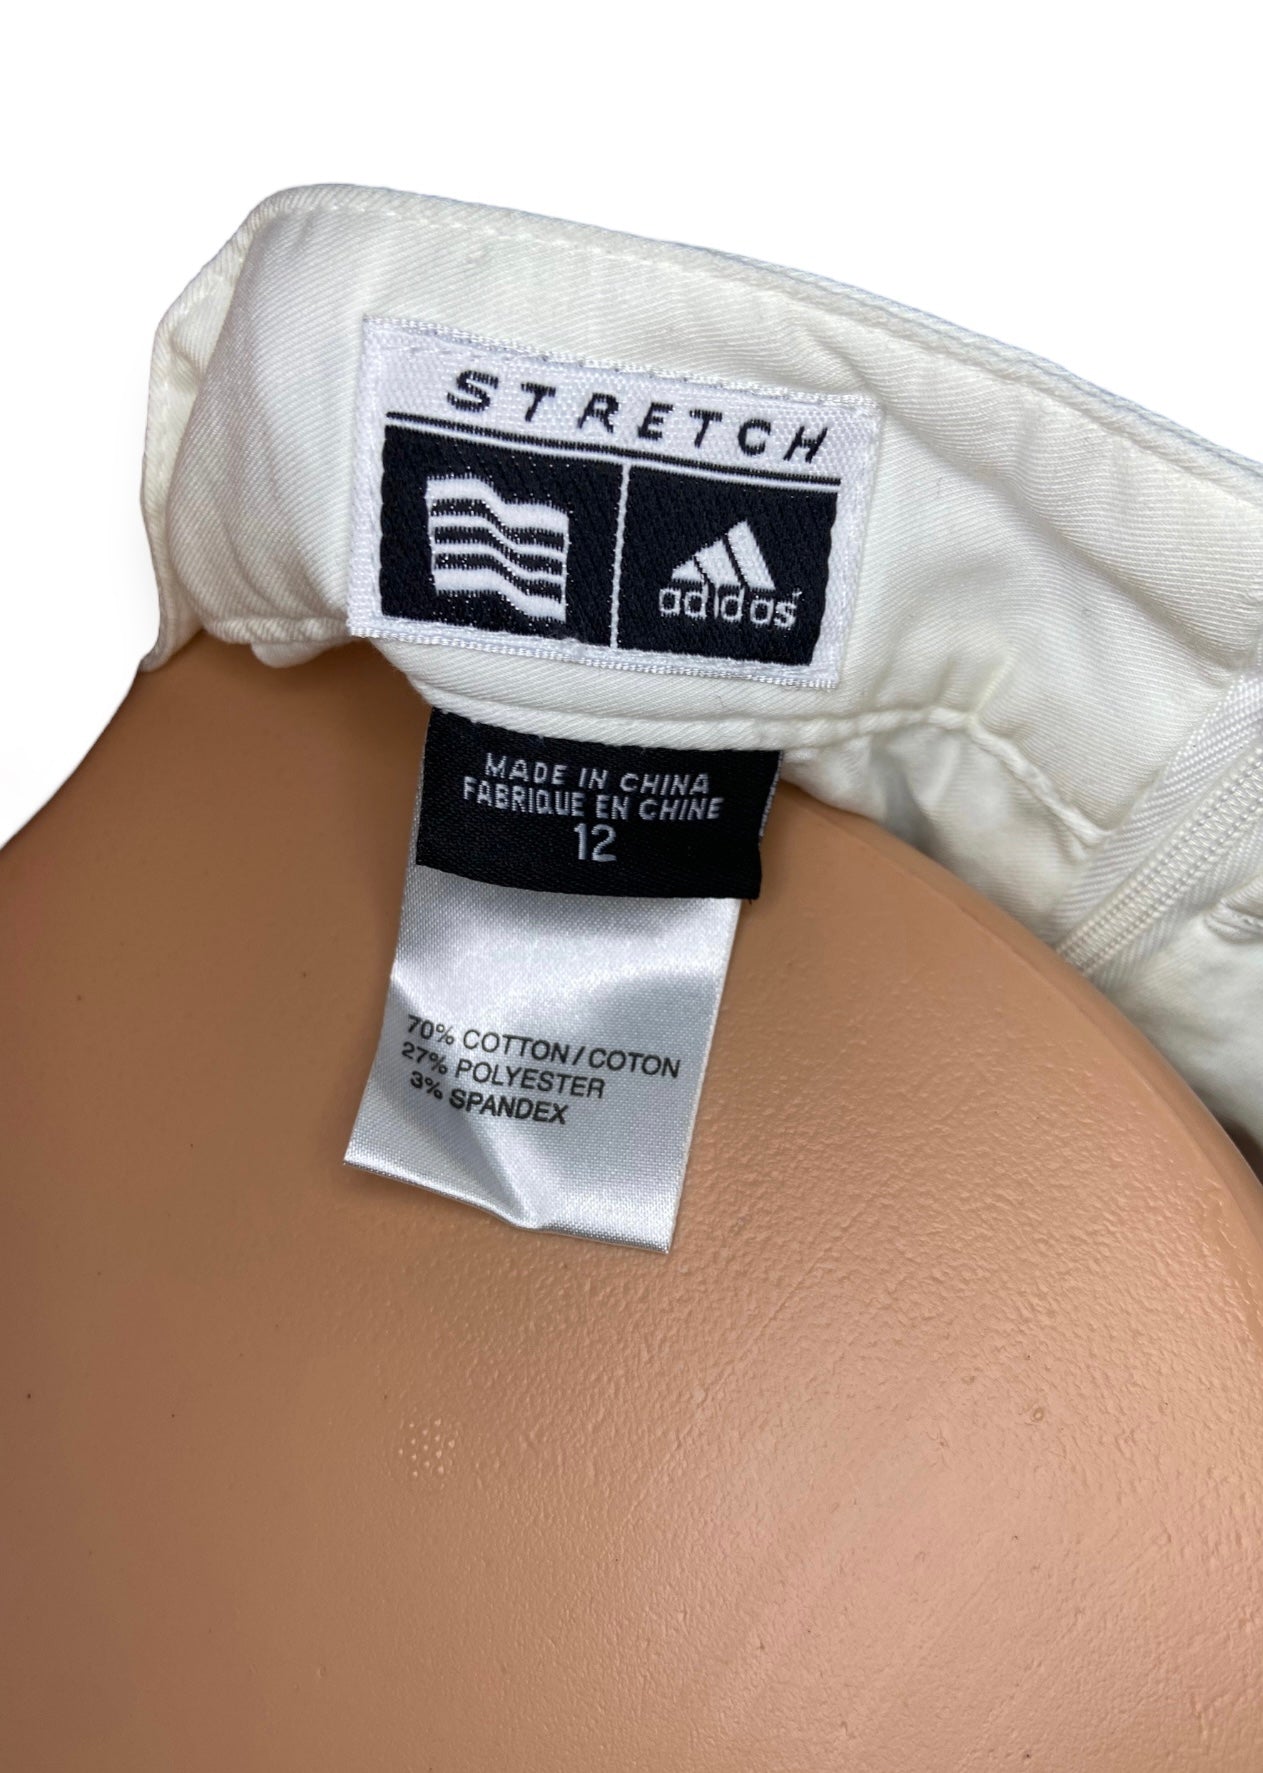 NWT Adidas Woman's Stretch Skort in White Size 12